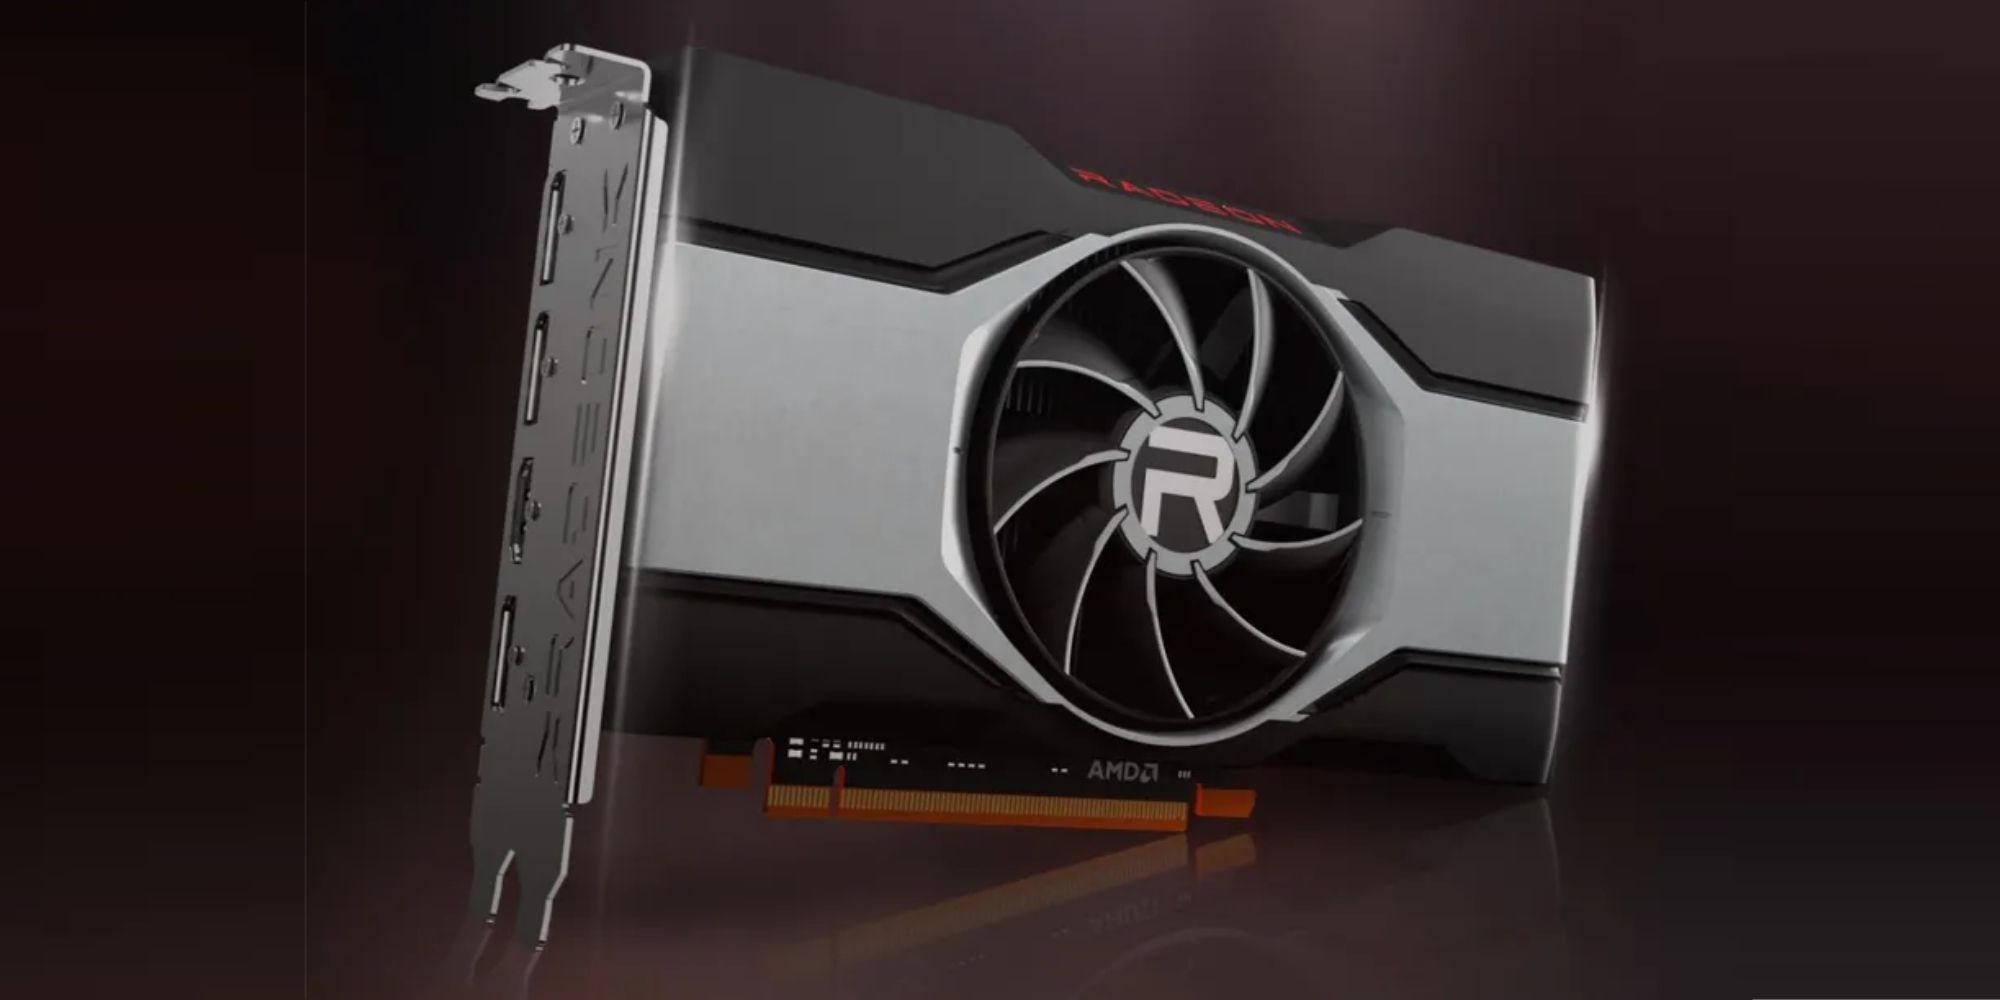 AMD Radeon RX 6600 GPU